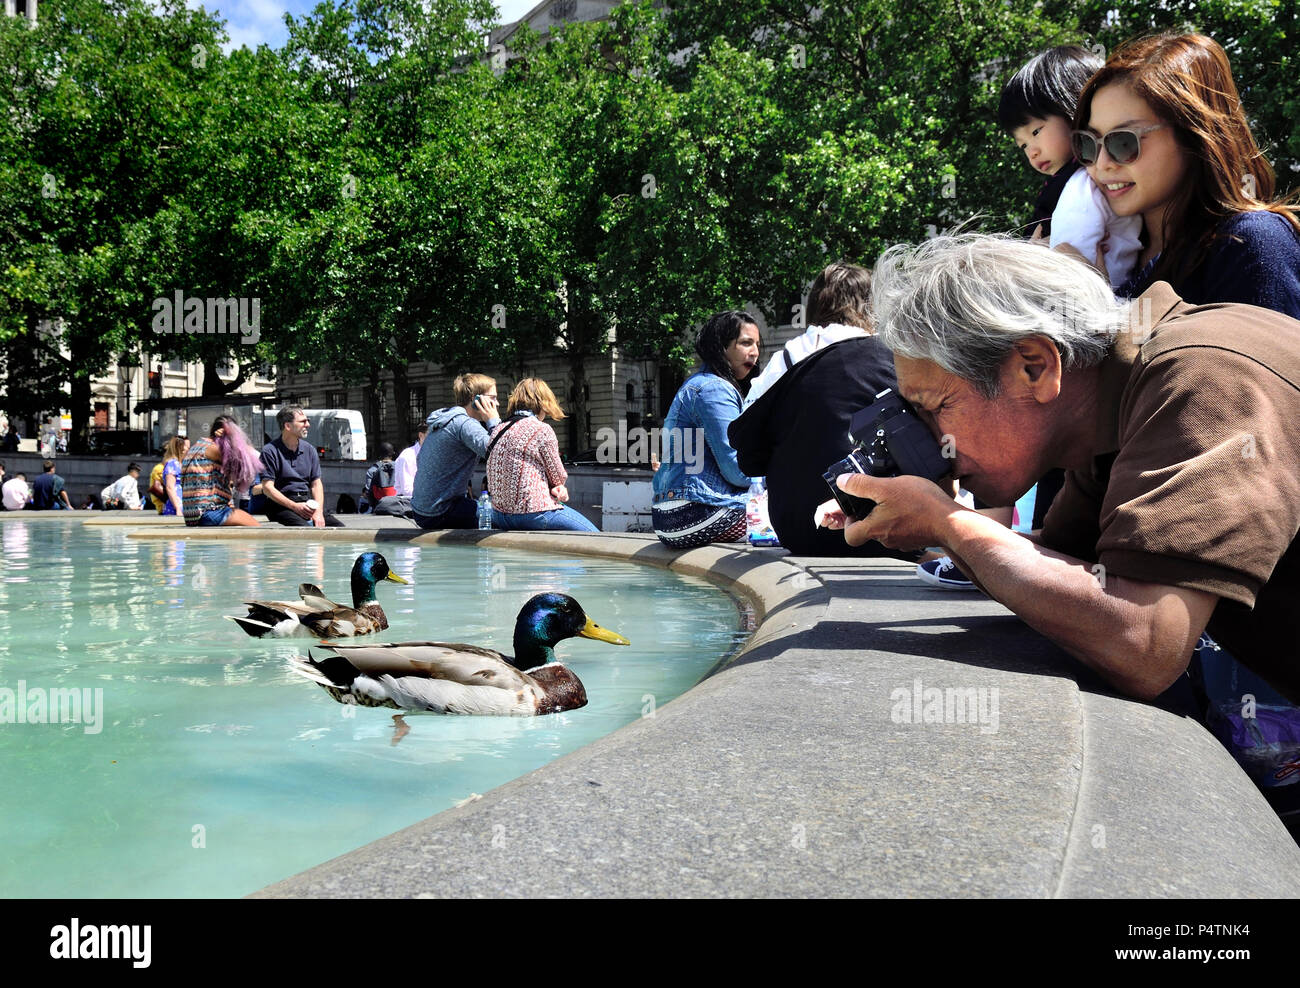 Japanese tourist photographing Mallard ducks (Anas platyrhynchos) in one of the fountains in Trafalgar Square, London, England, UK. Stock Photo